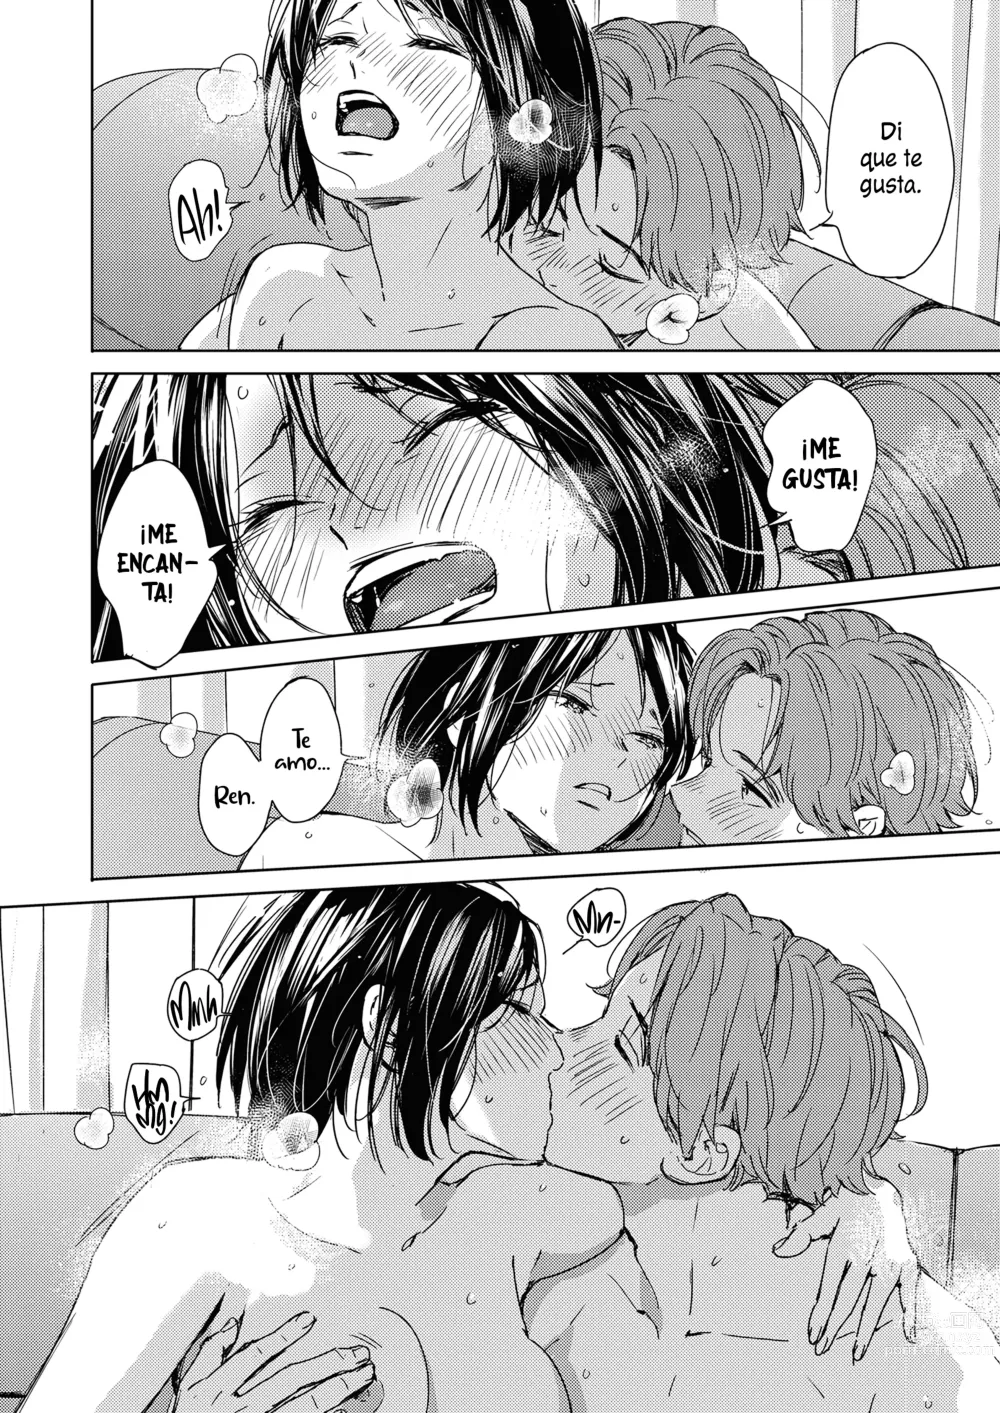 Page 38 of manga Gafas del ~Primer amor~